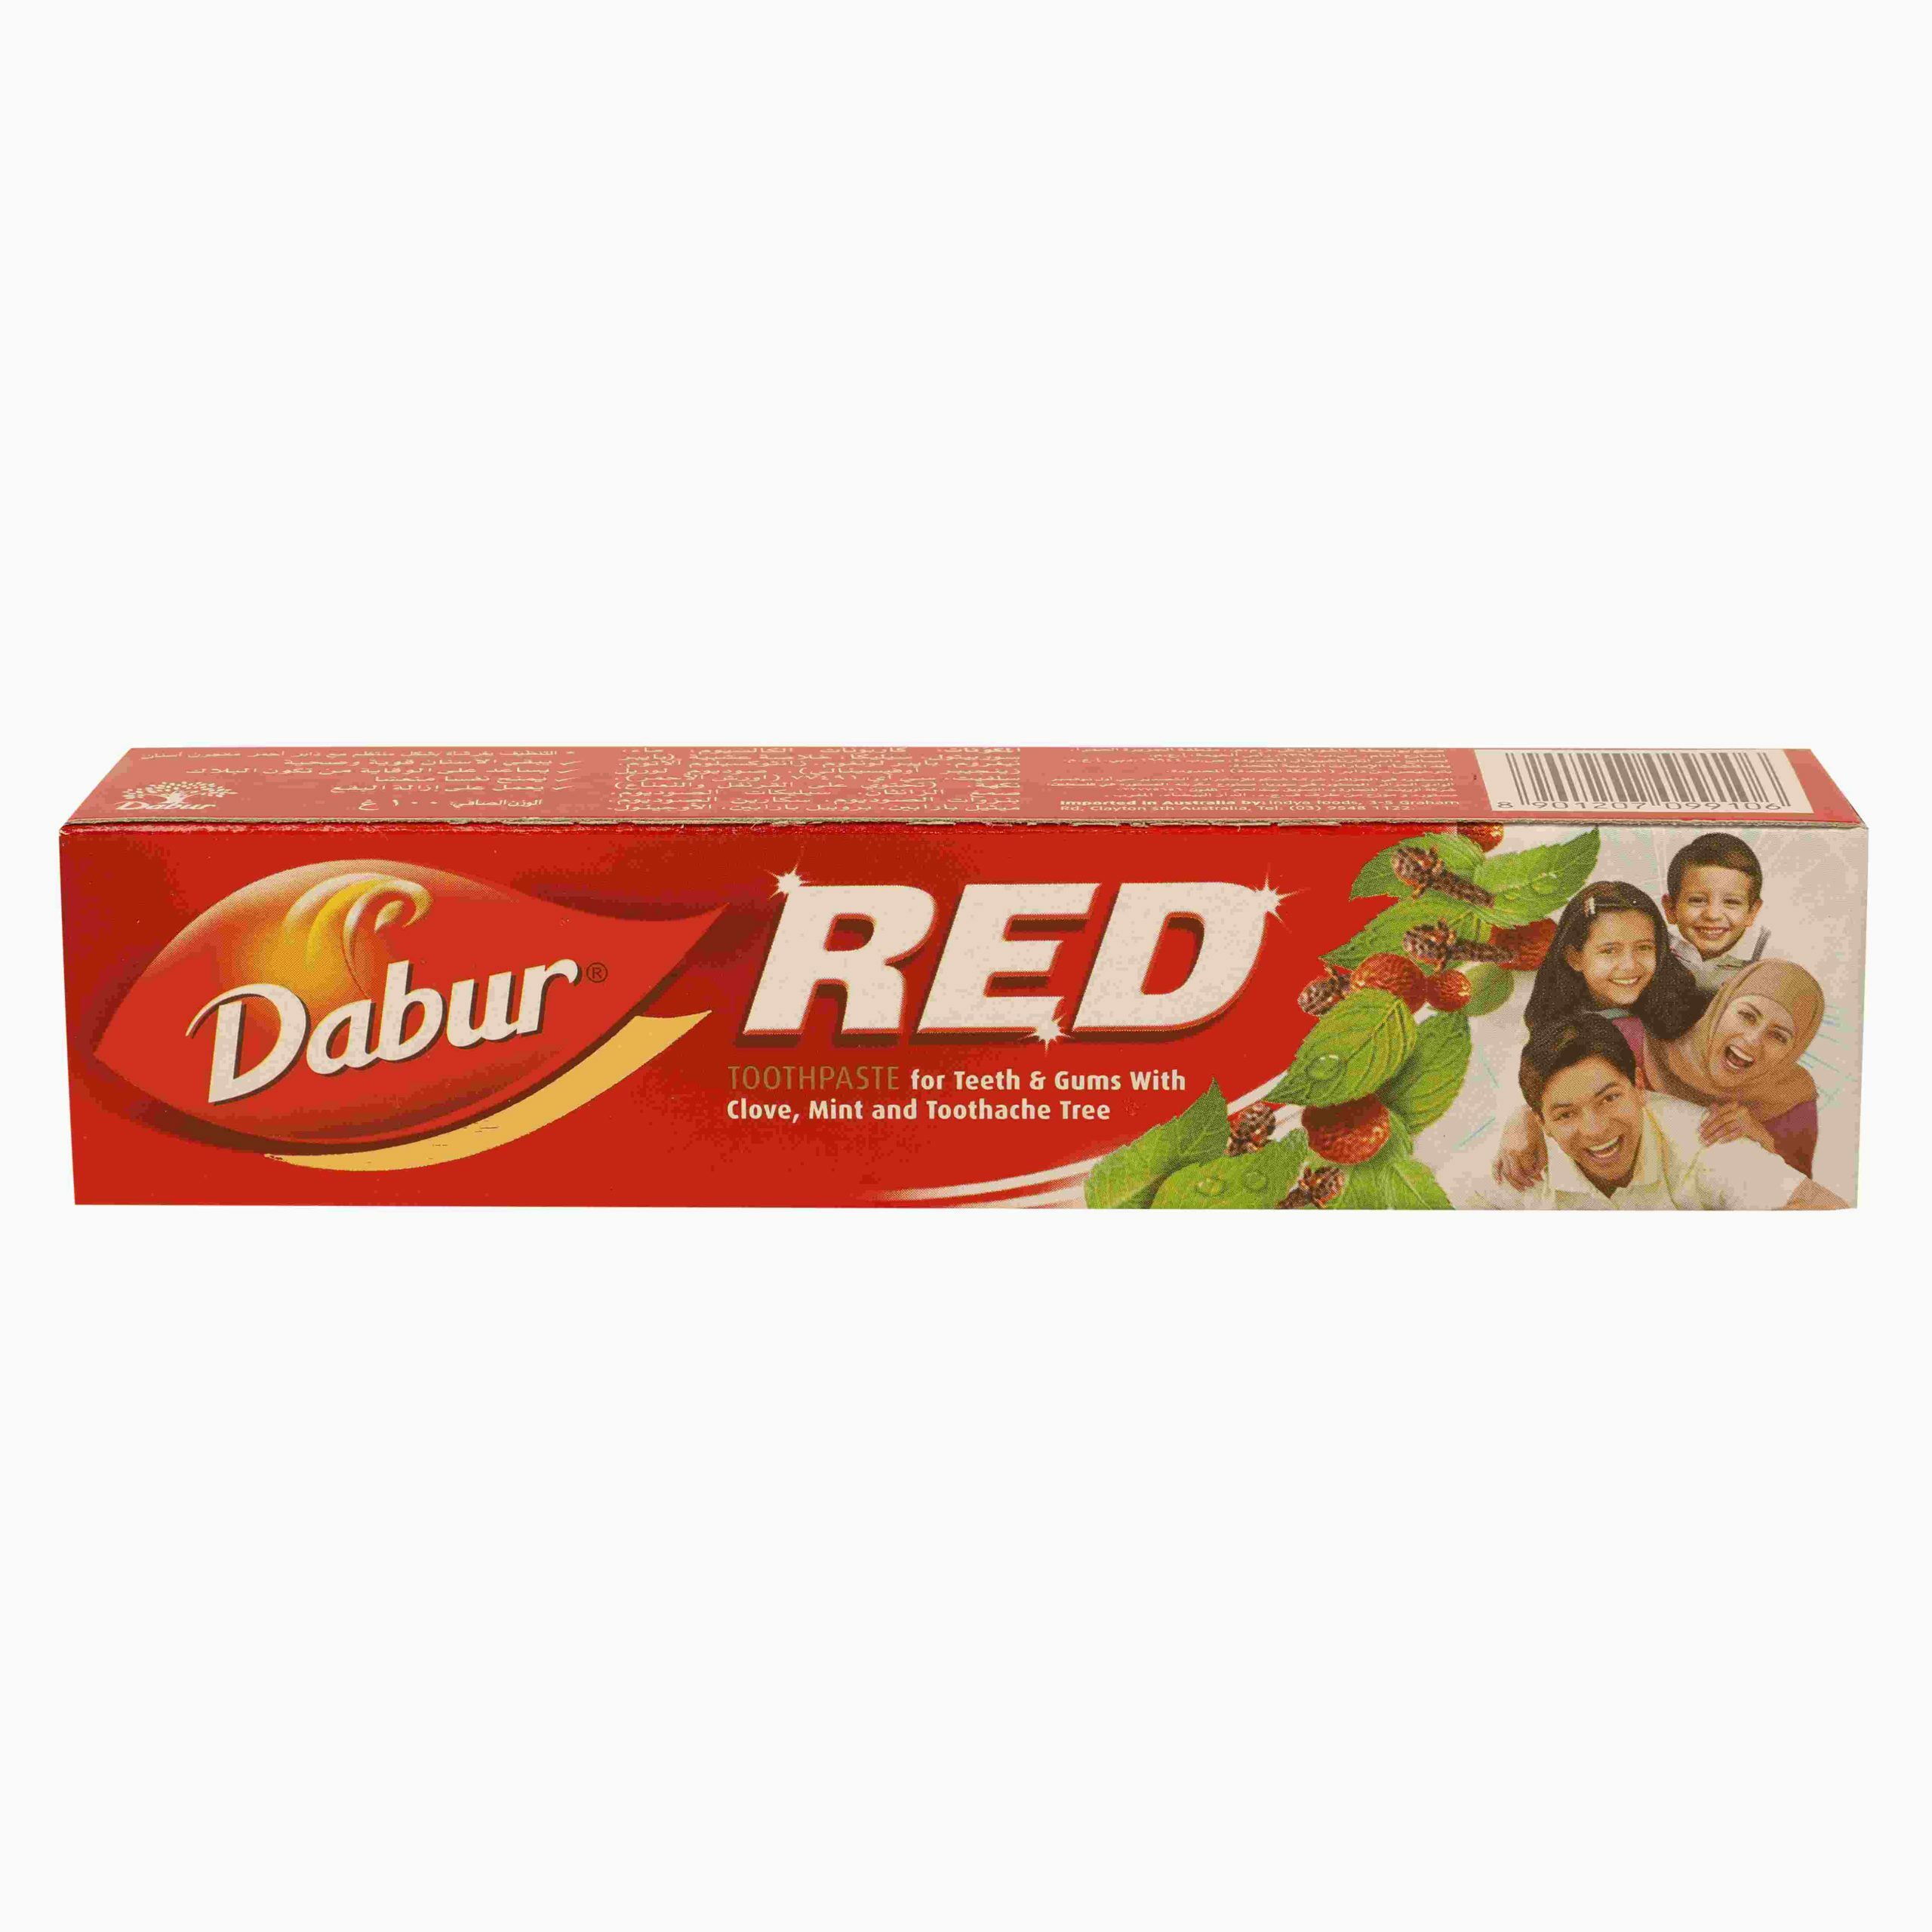 Dabur red Toothpaste 100g